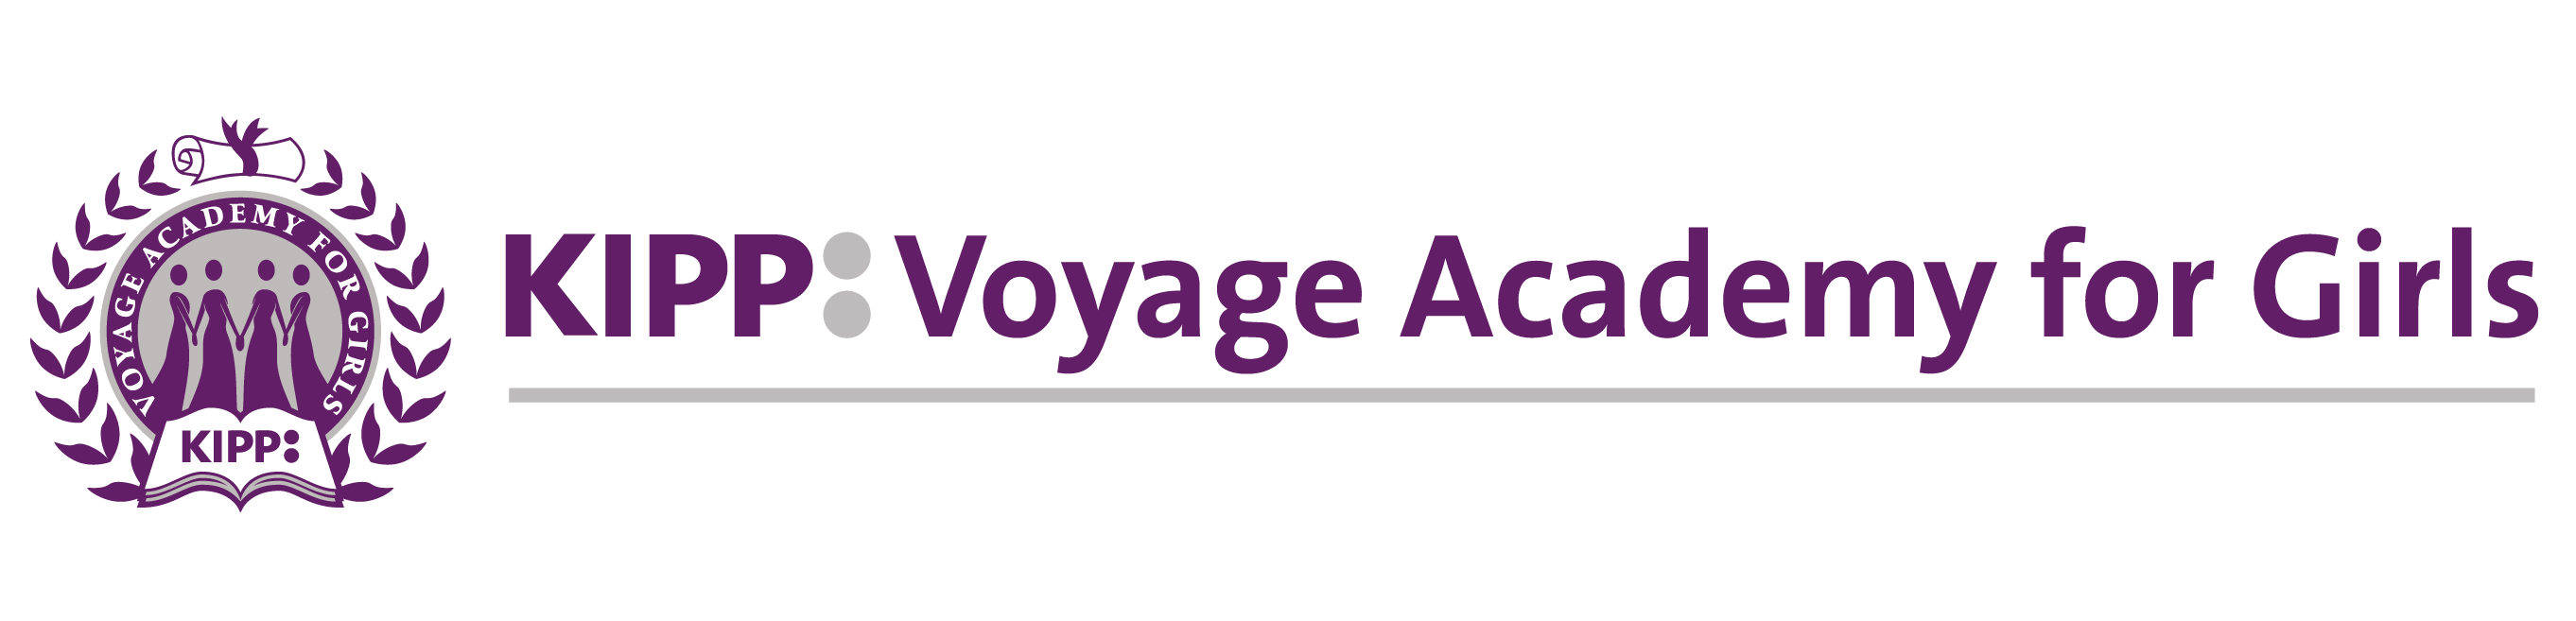 KIPP Voyage Academy for Girls